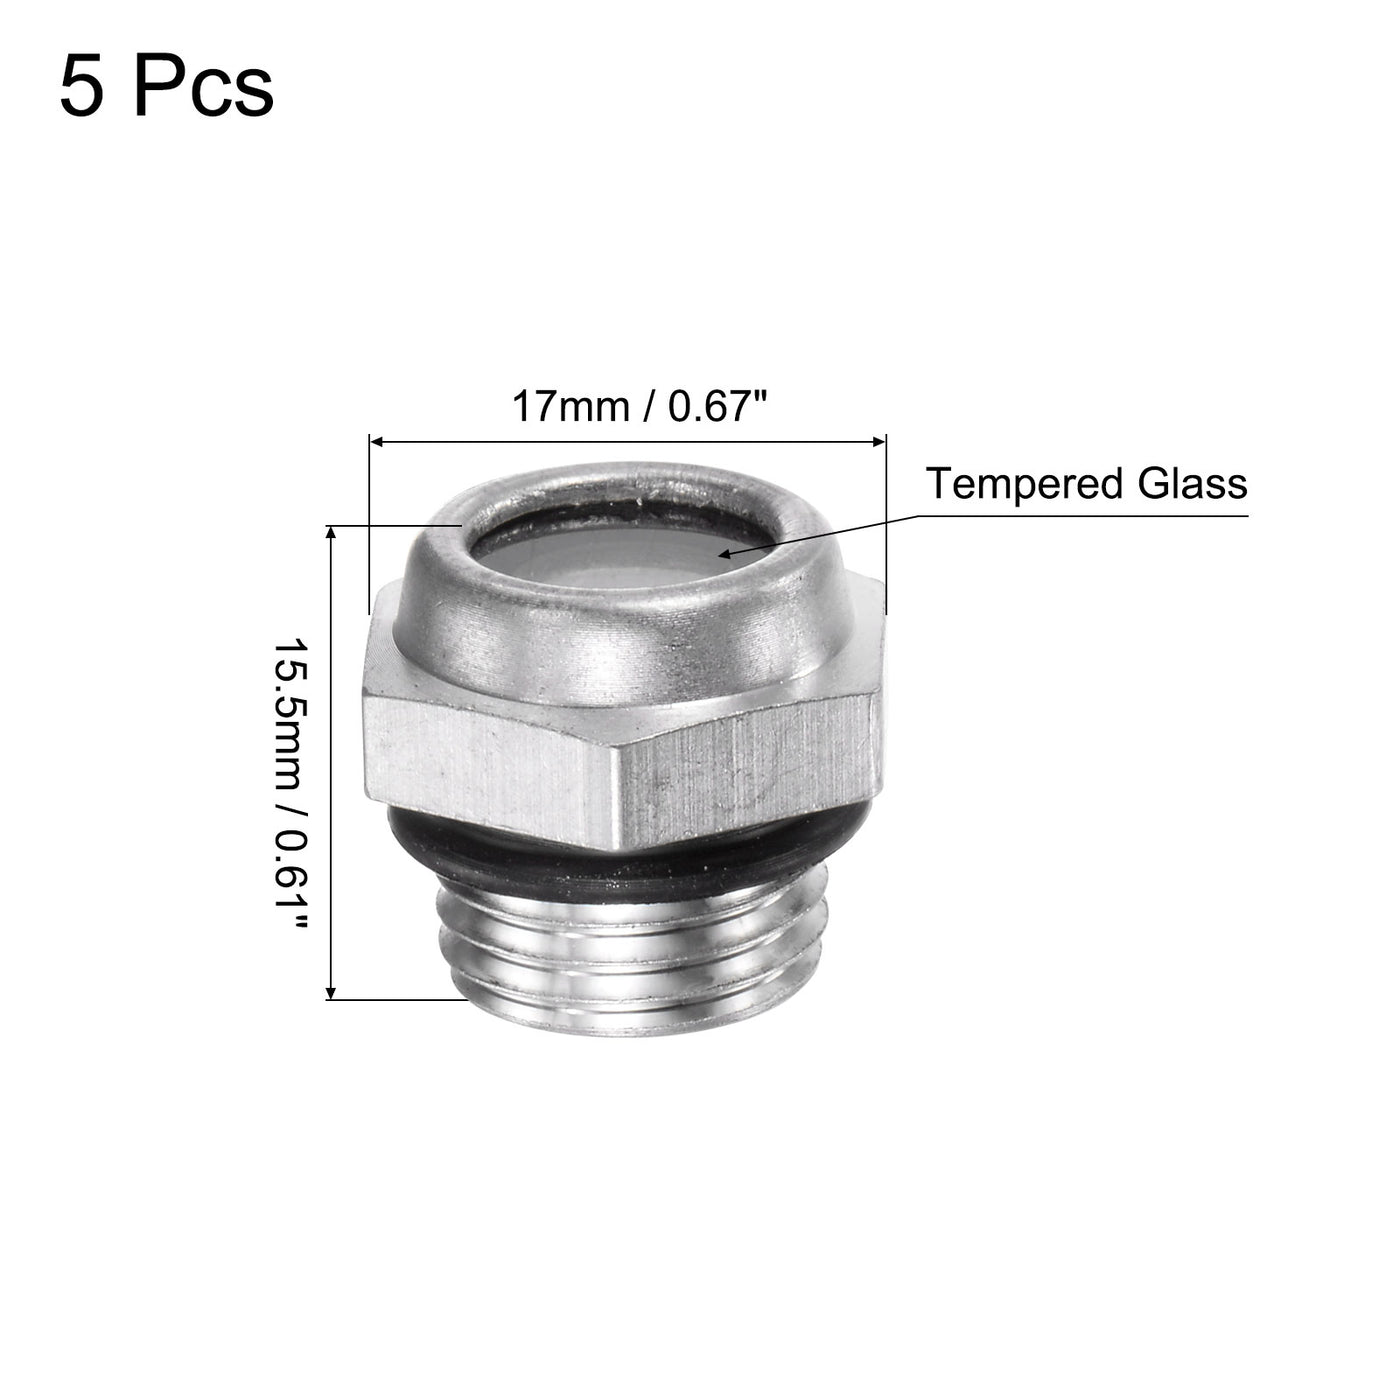 uxcell Uxcell Air Compressor Oil Level Gauge Sight Glass G1/4" Male Thread Aluminum 5Pcs